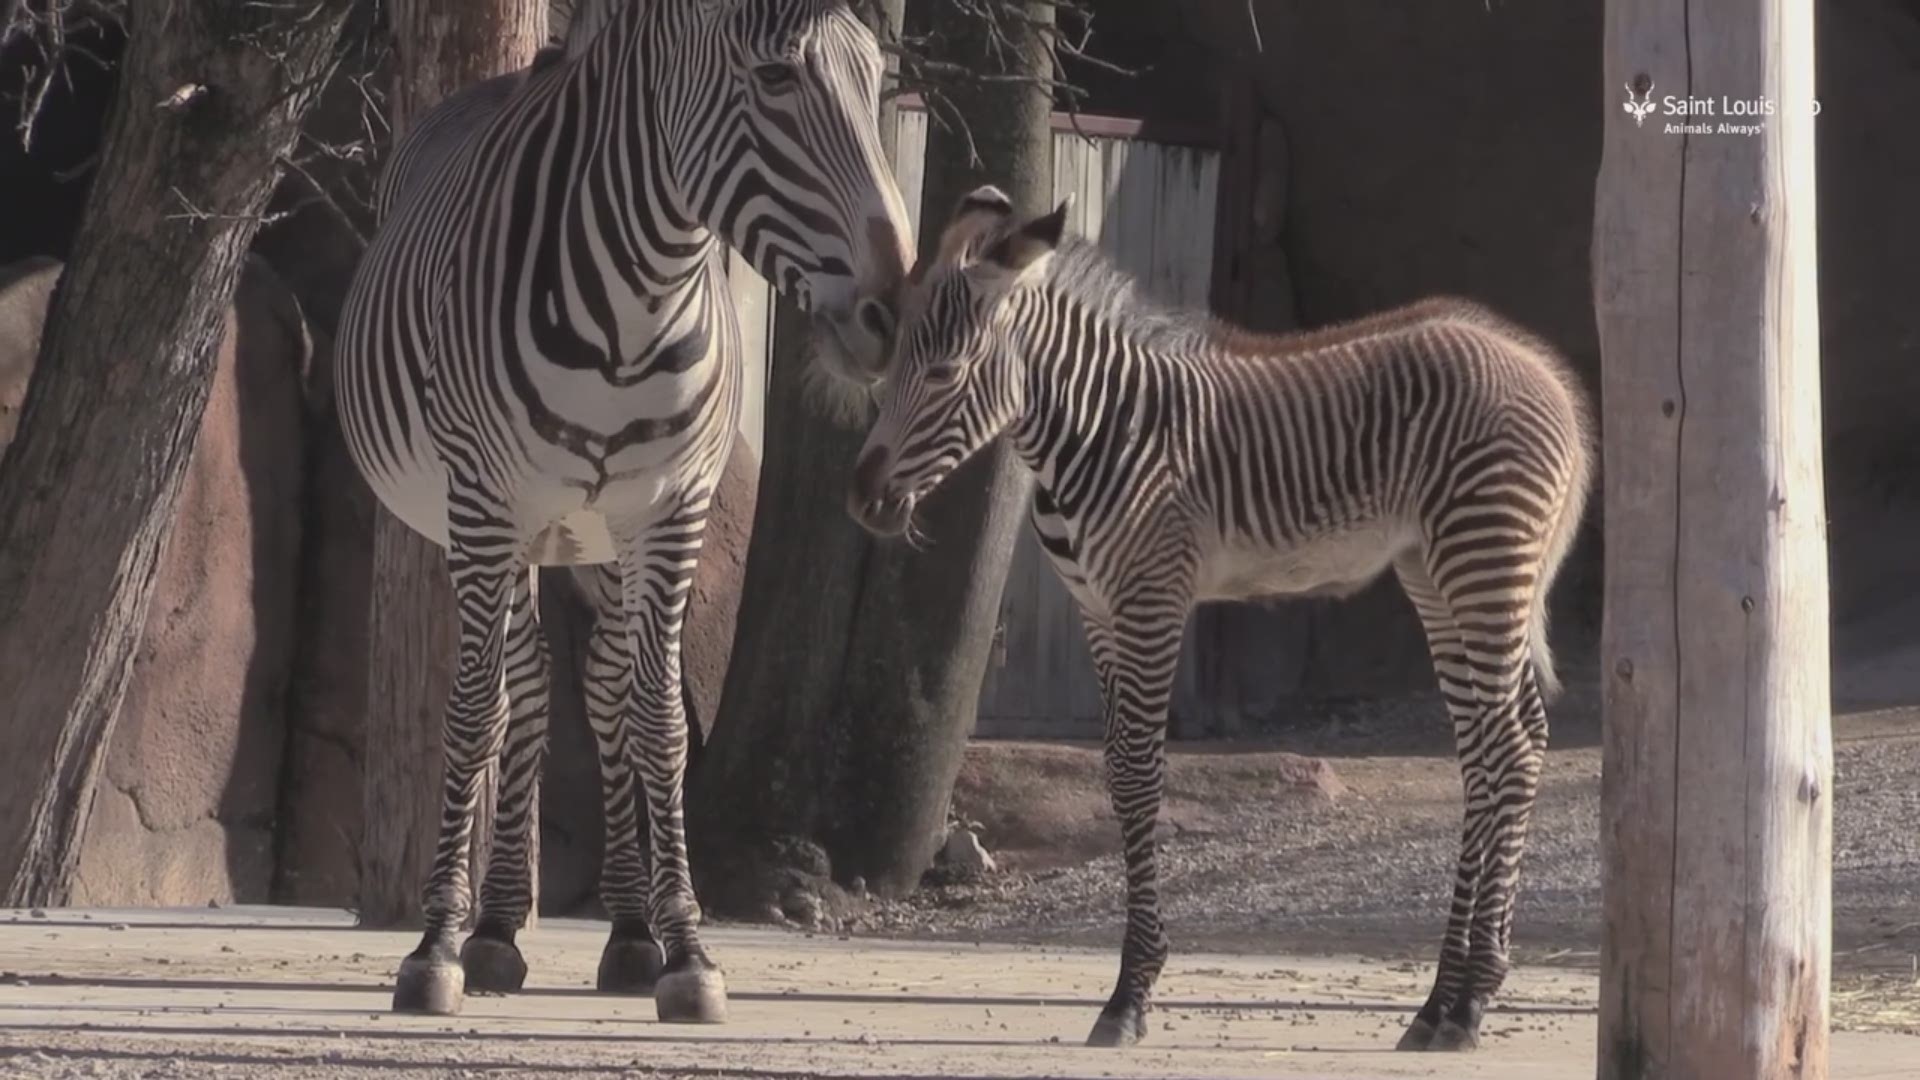 St. Louis Zoo welcomes new zebra | 0